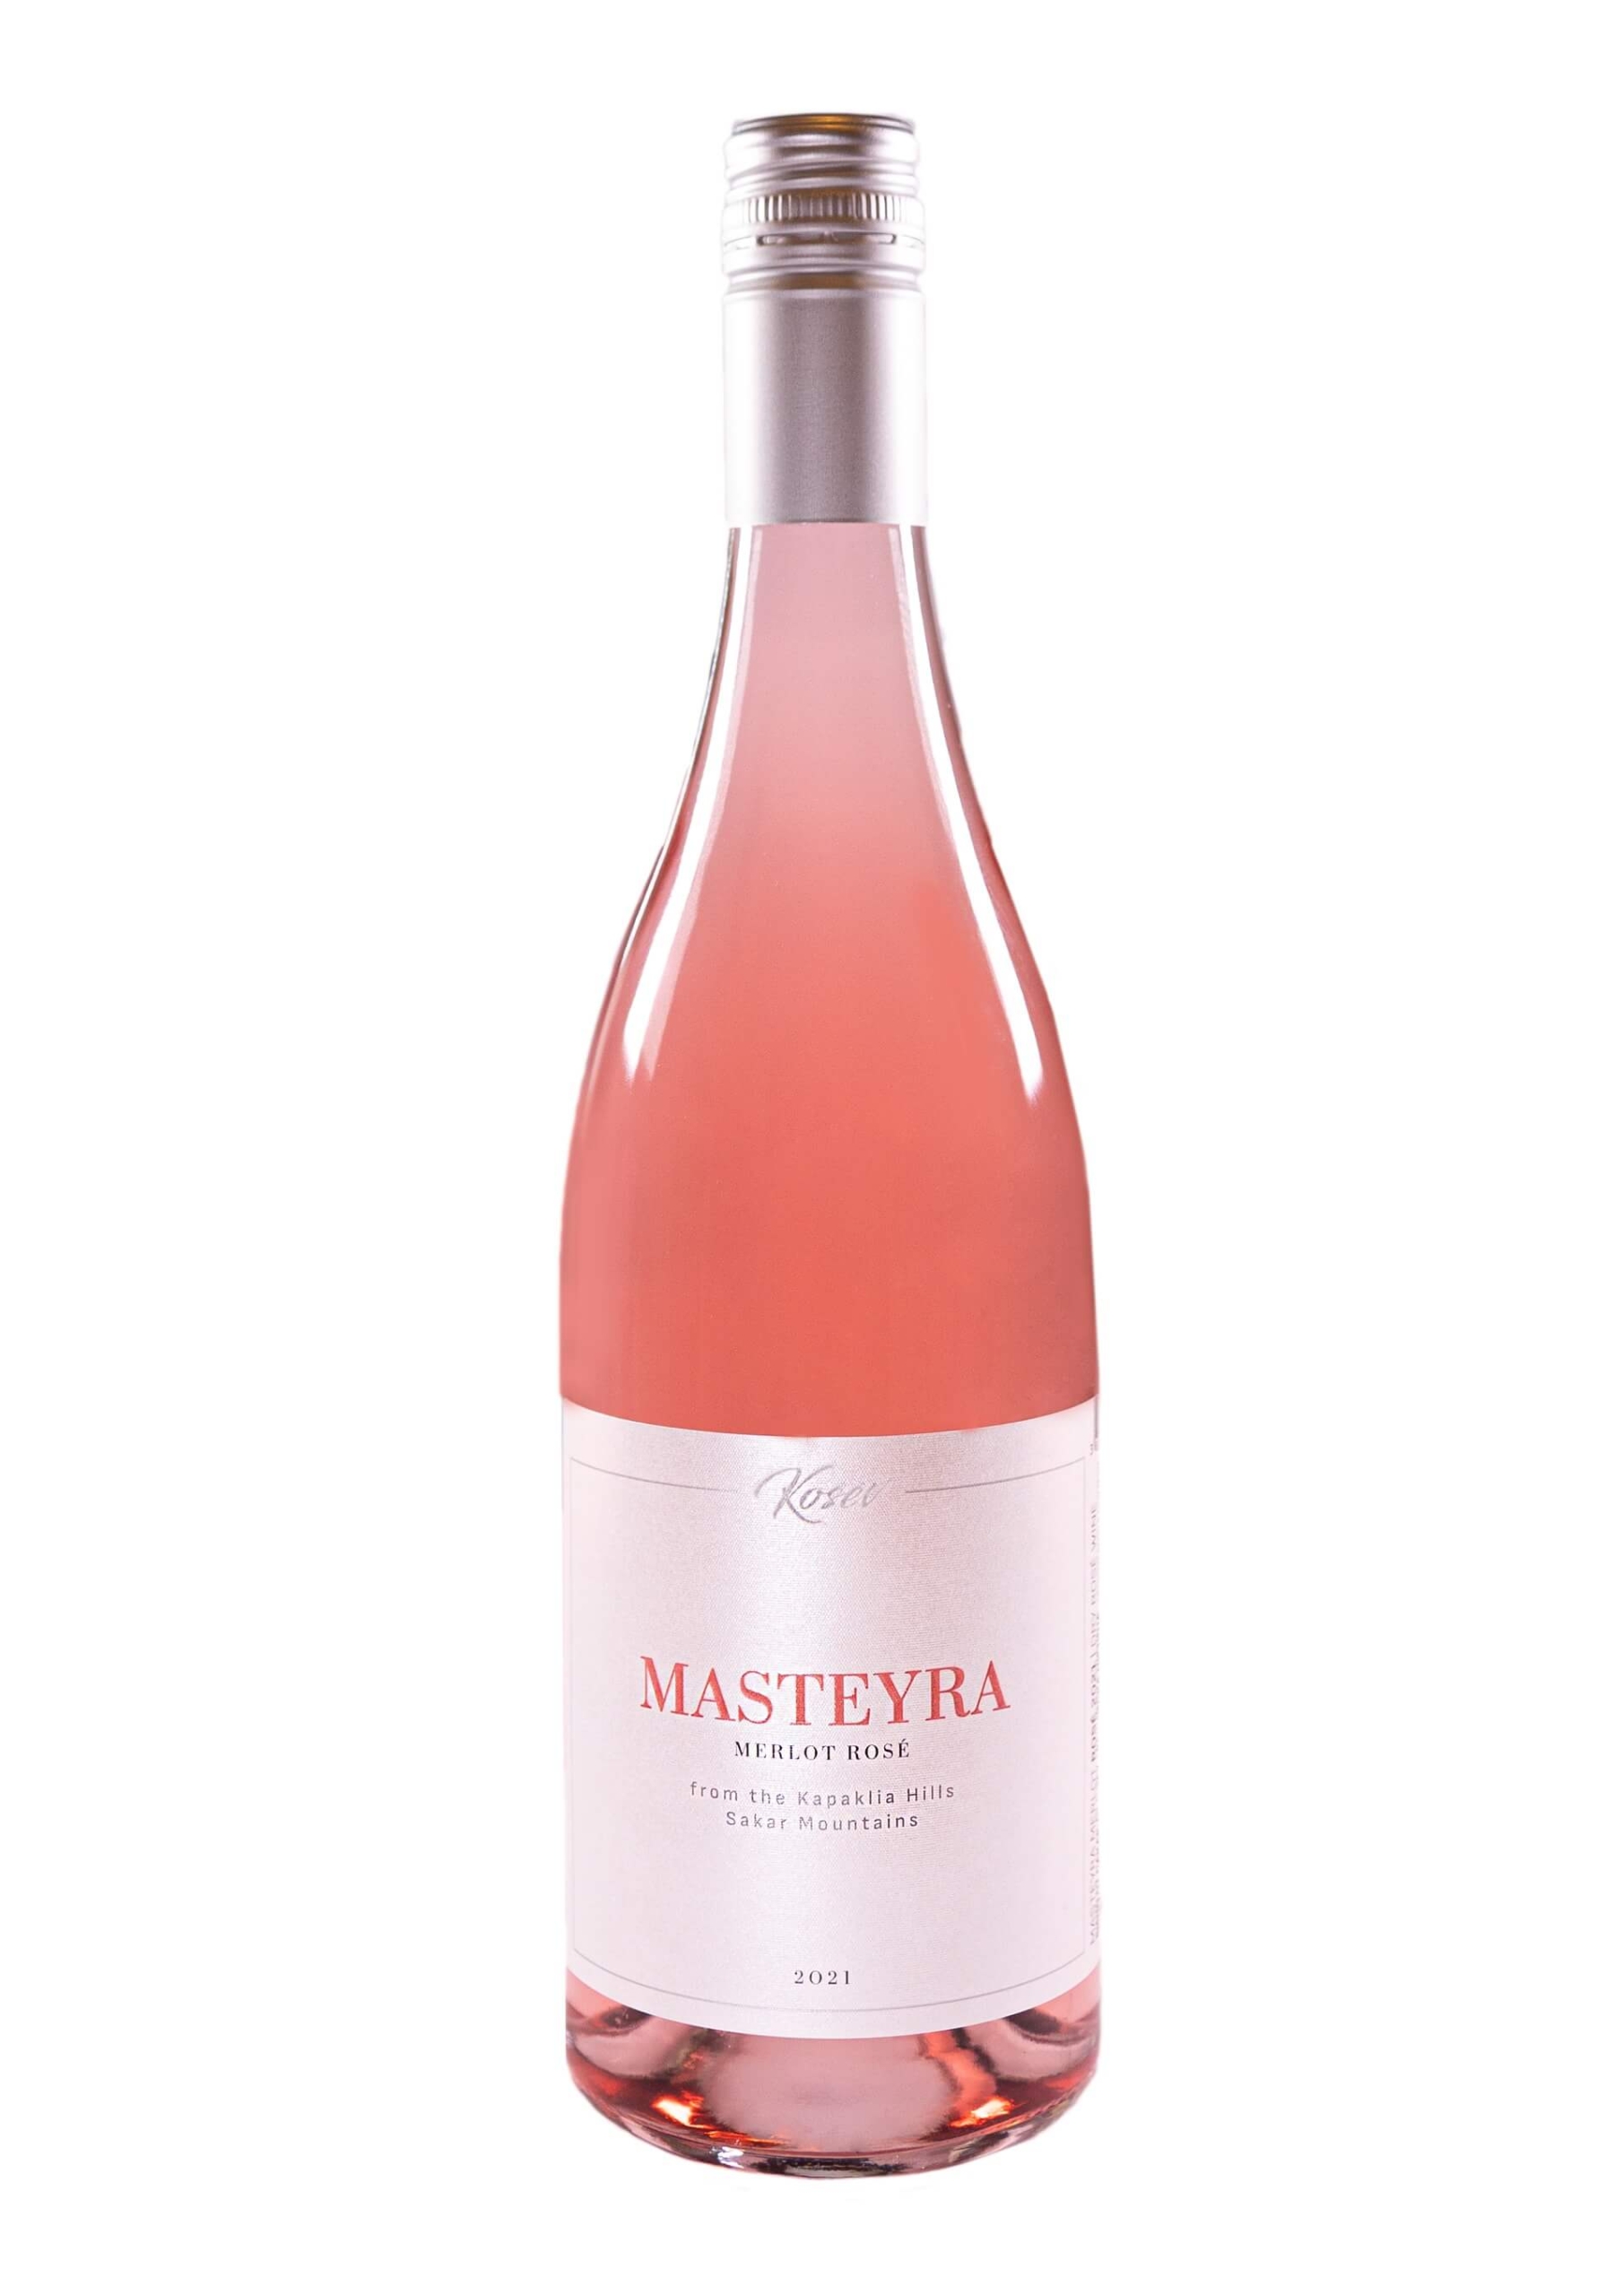 Vinarna-Kosev-Masteyra-roze